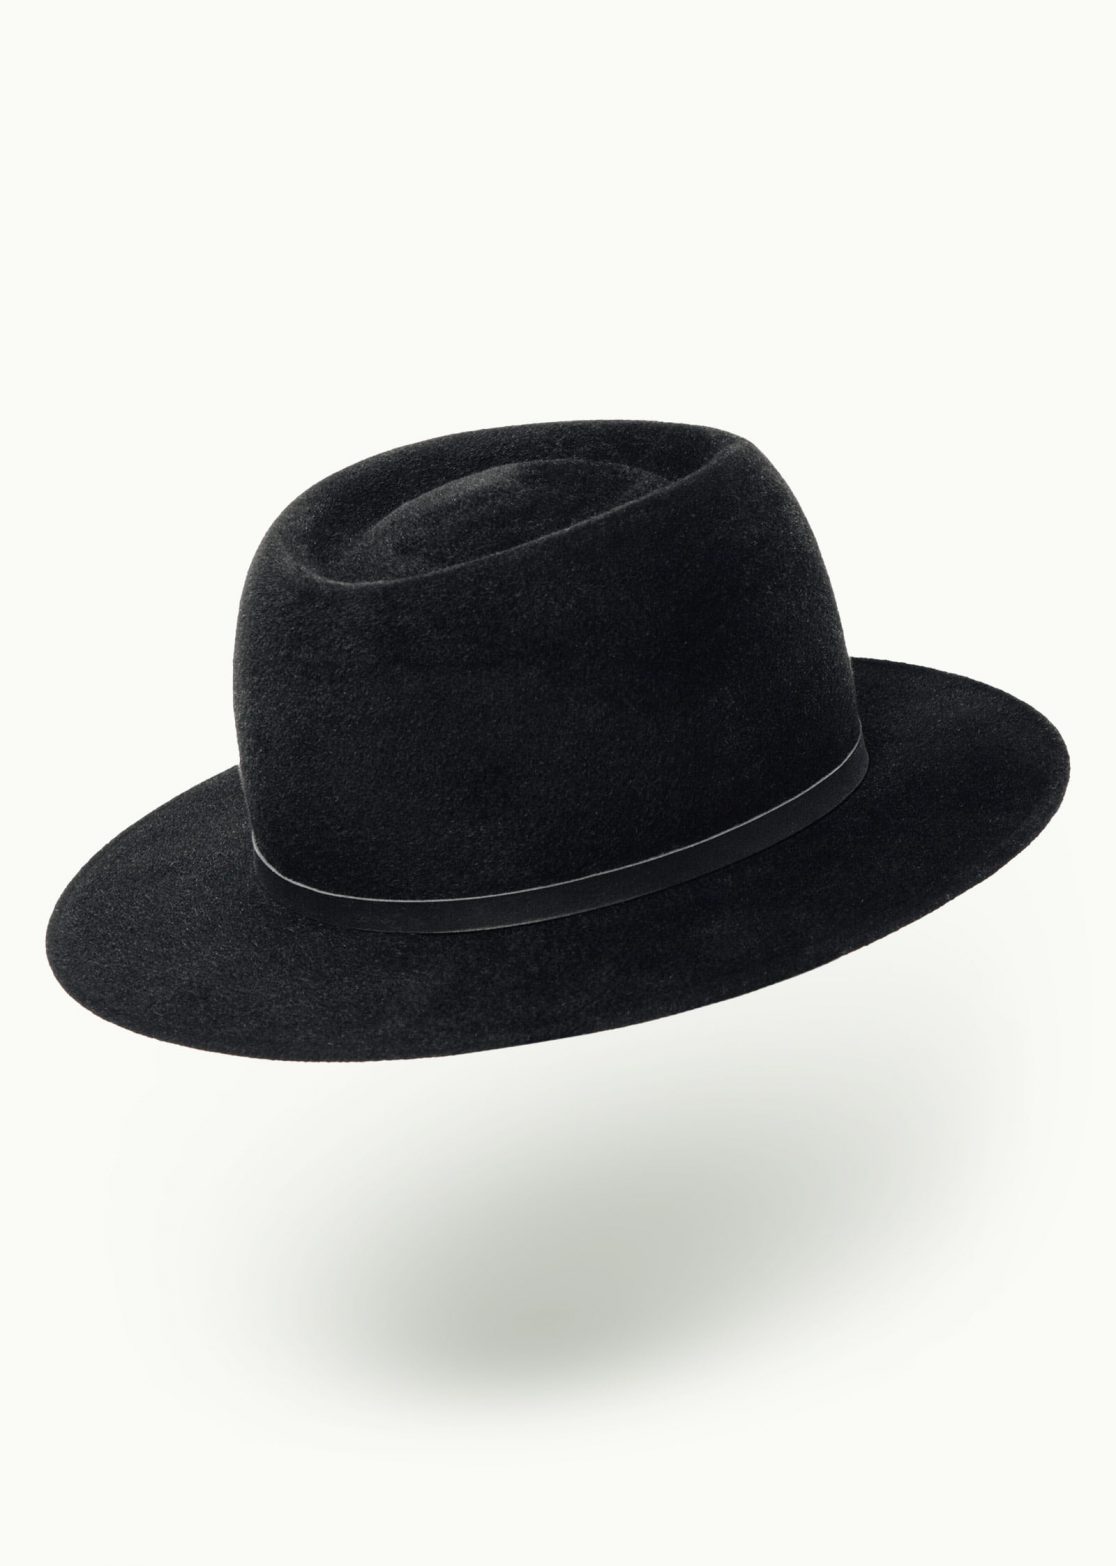 Hats - Women - Unisex - Men - Aldon Black Velour Image Primary